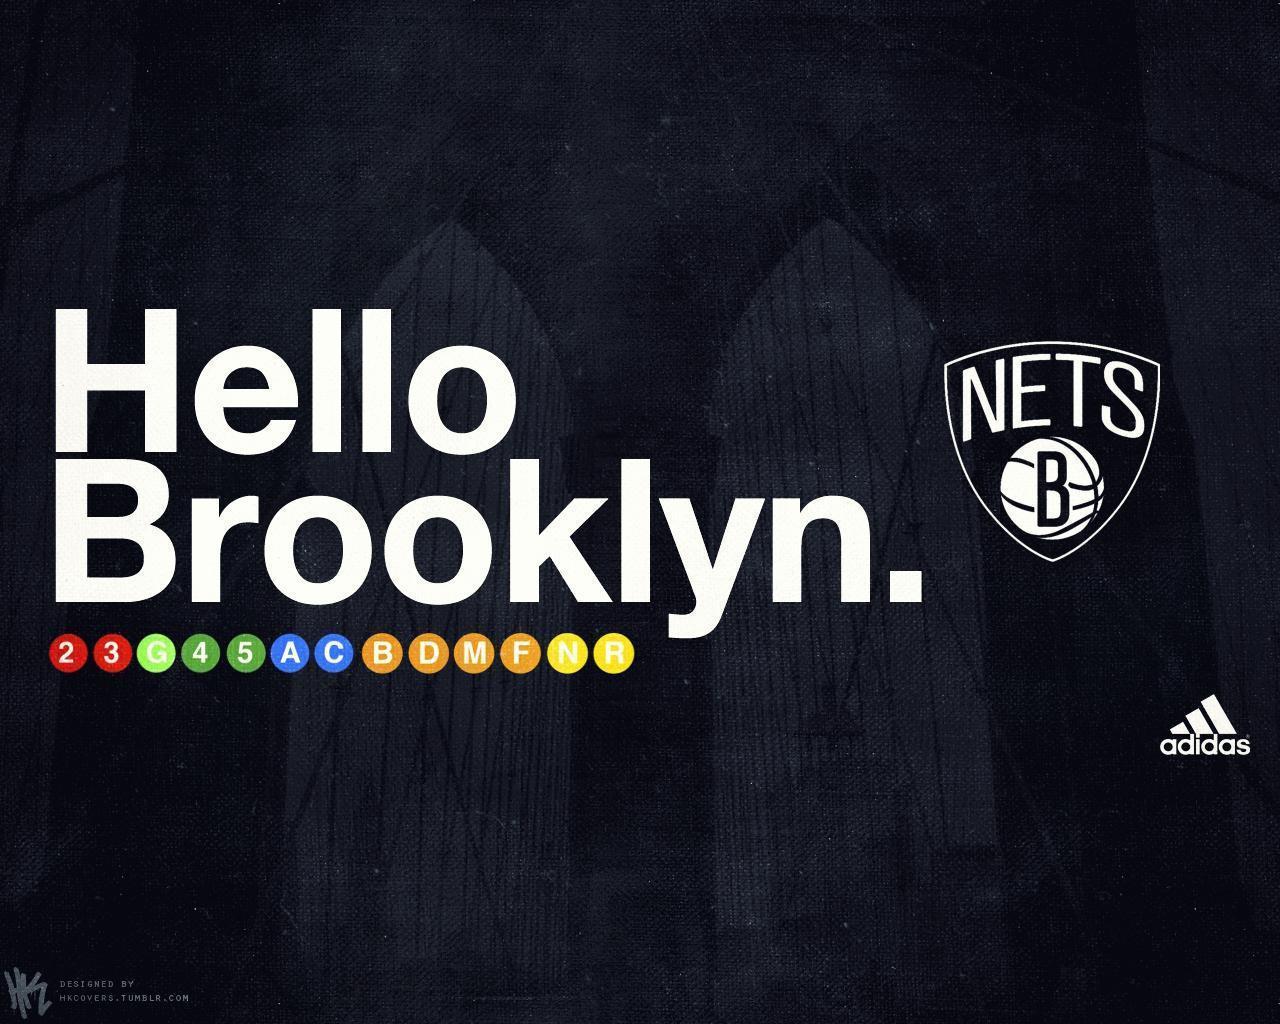 Hello Brooklyn. Brooklyn Nets. Inspiration